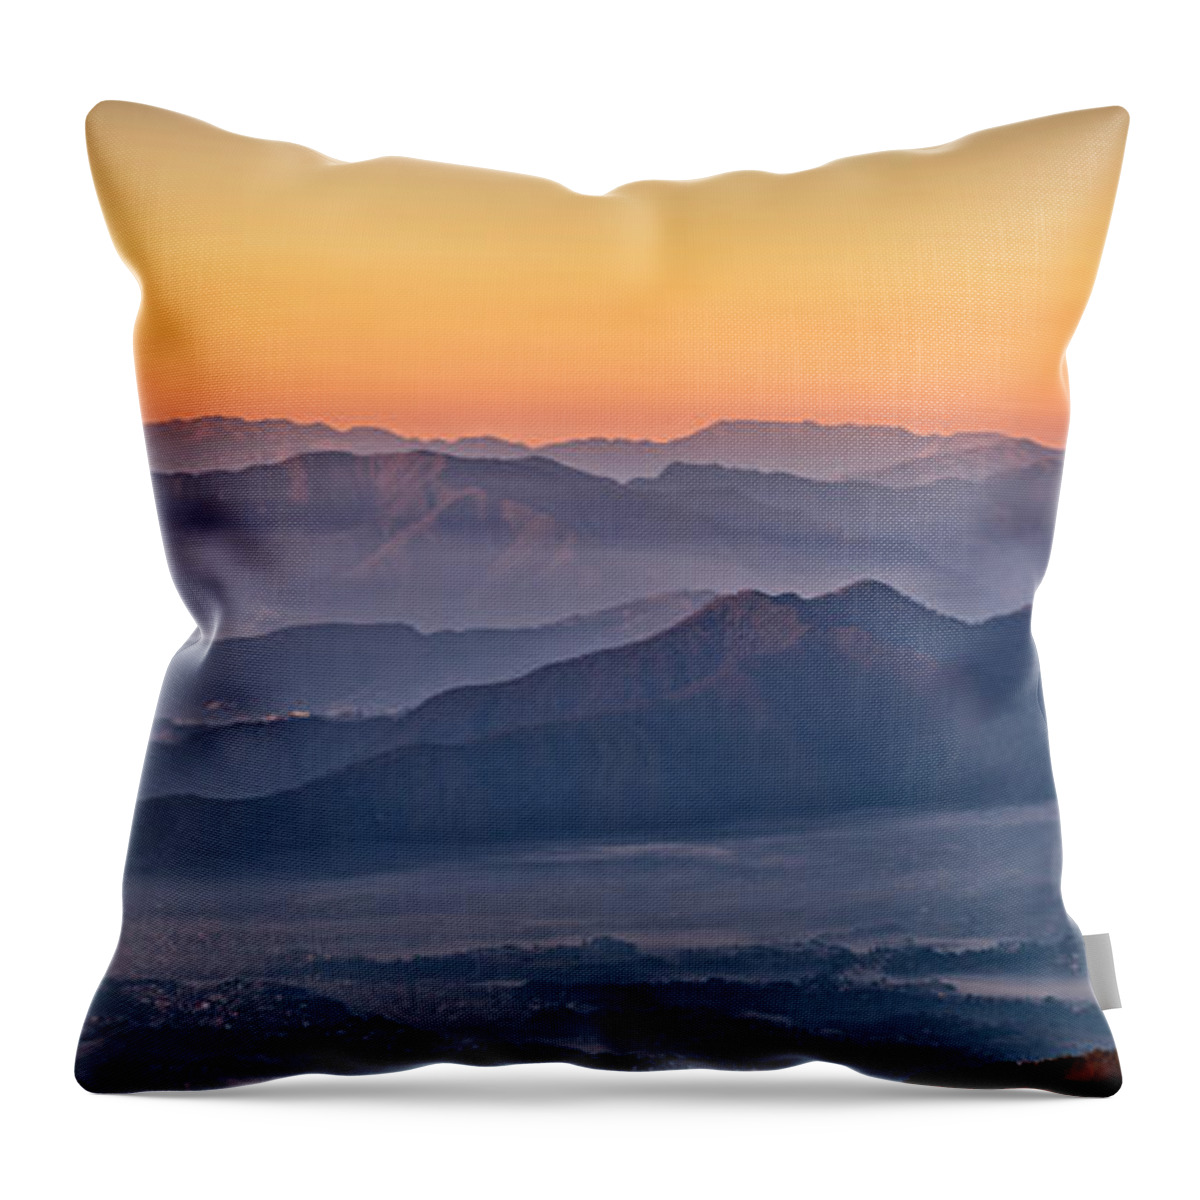 Fog Throw Pillow featuring the photograph Himalayan mountains by U Schade